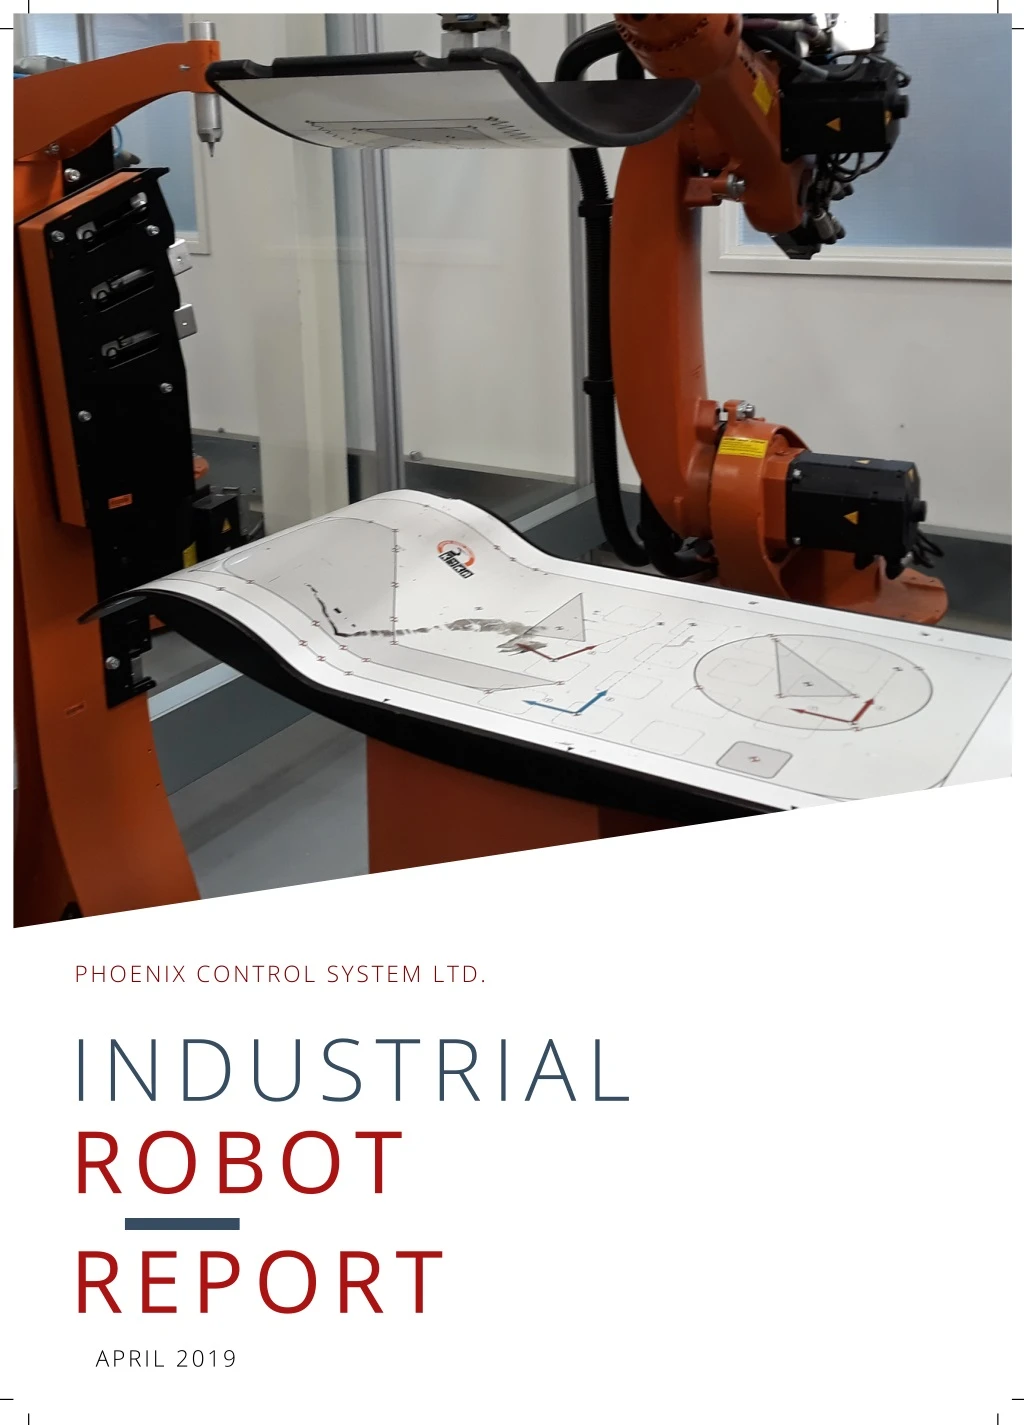 phoenix control system ltd industrial robot